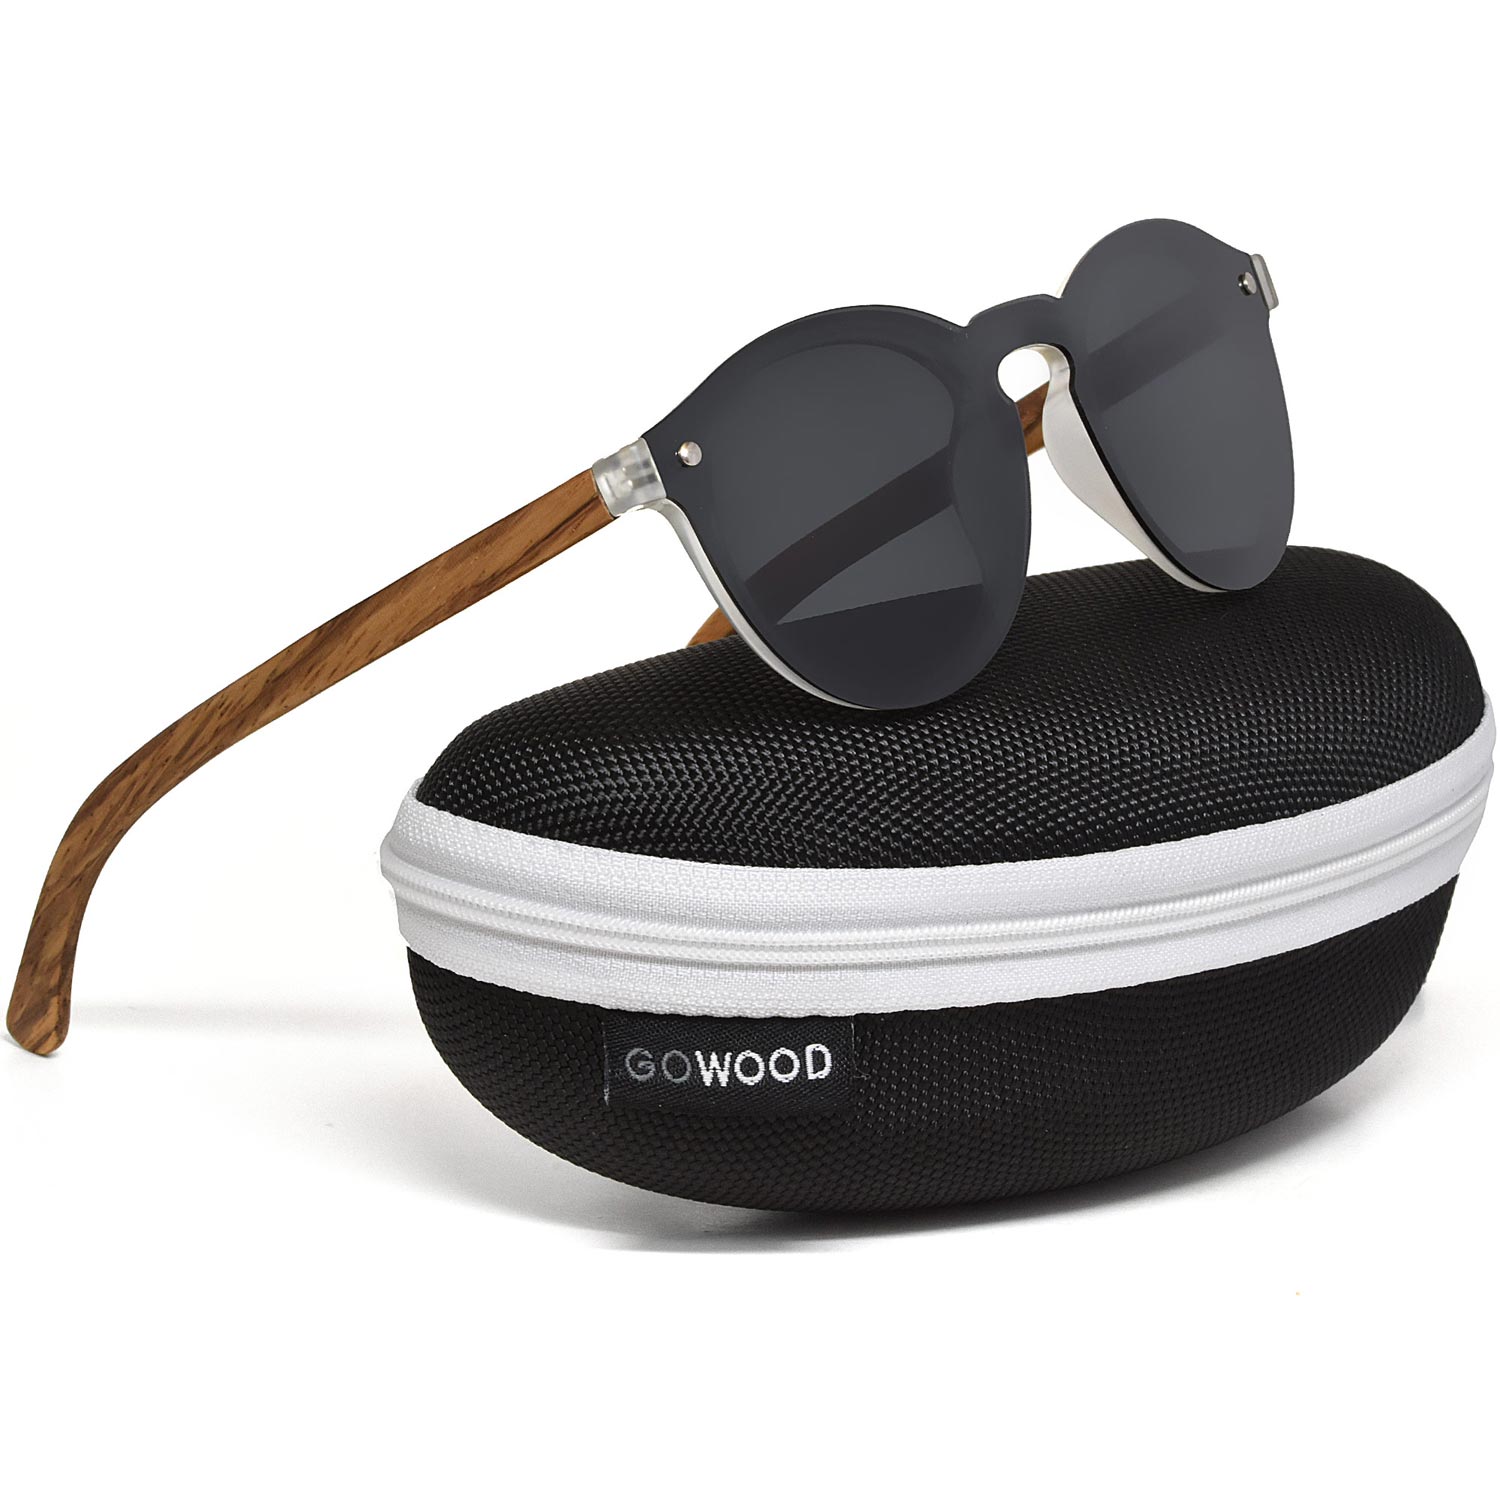 Round zebra wood sunglasses black polarized lenses zipper case